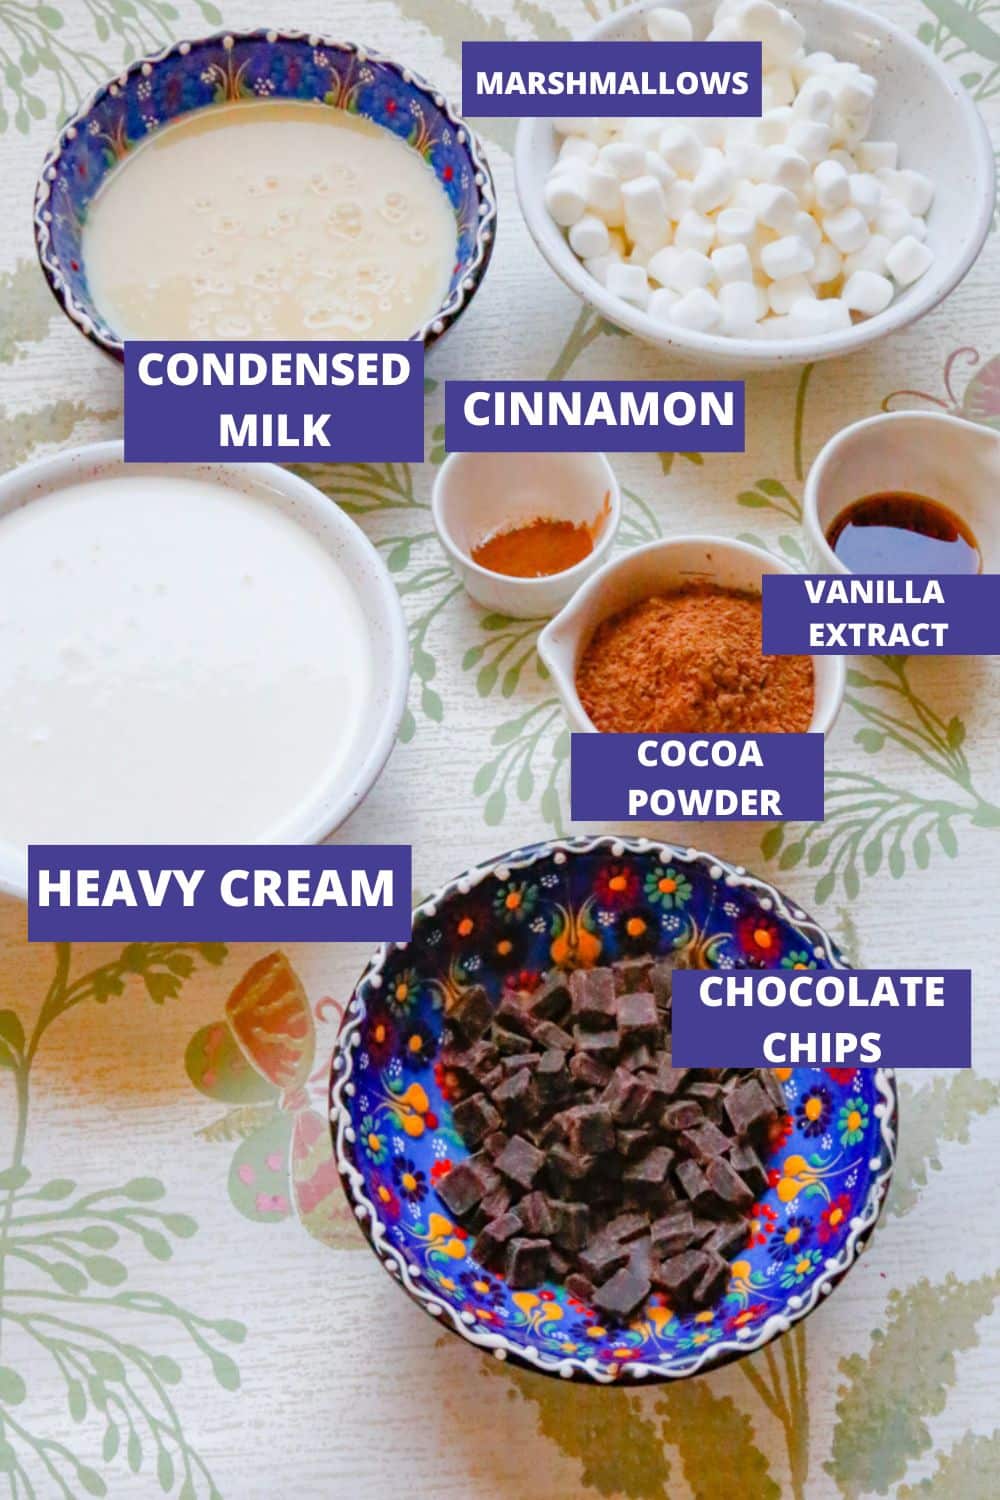 Ingredients for Chocolate marshmallow ice cream include chocolate chunks, heavy cream, condensed milk, vanilla extract, cinnamon, marshmallows, and cocoa powder 